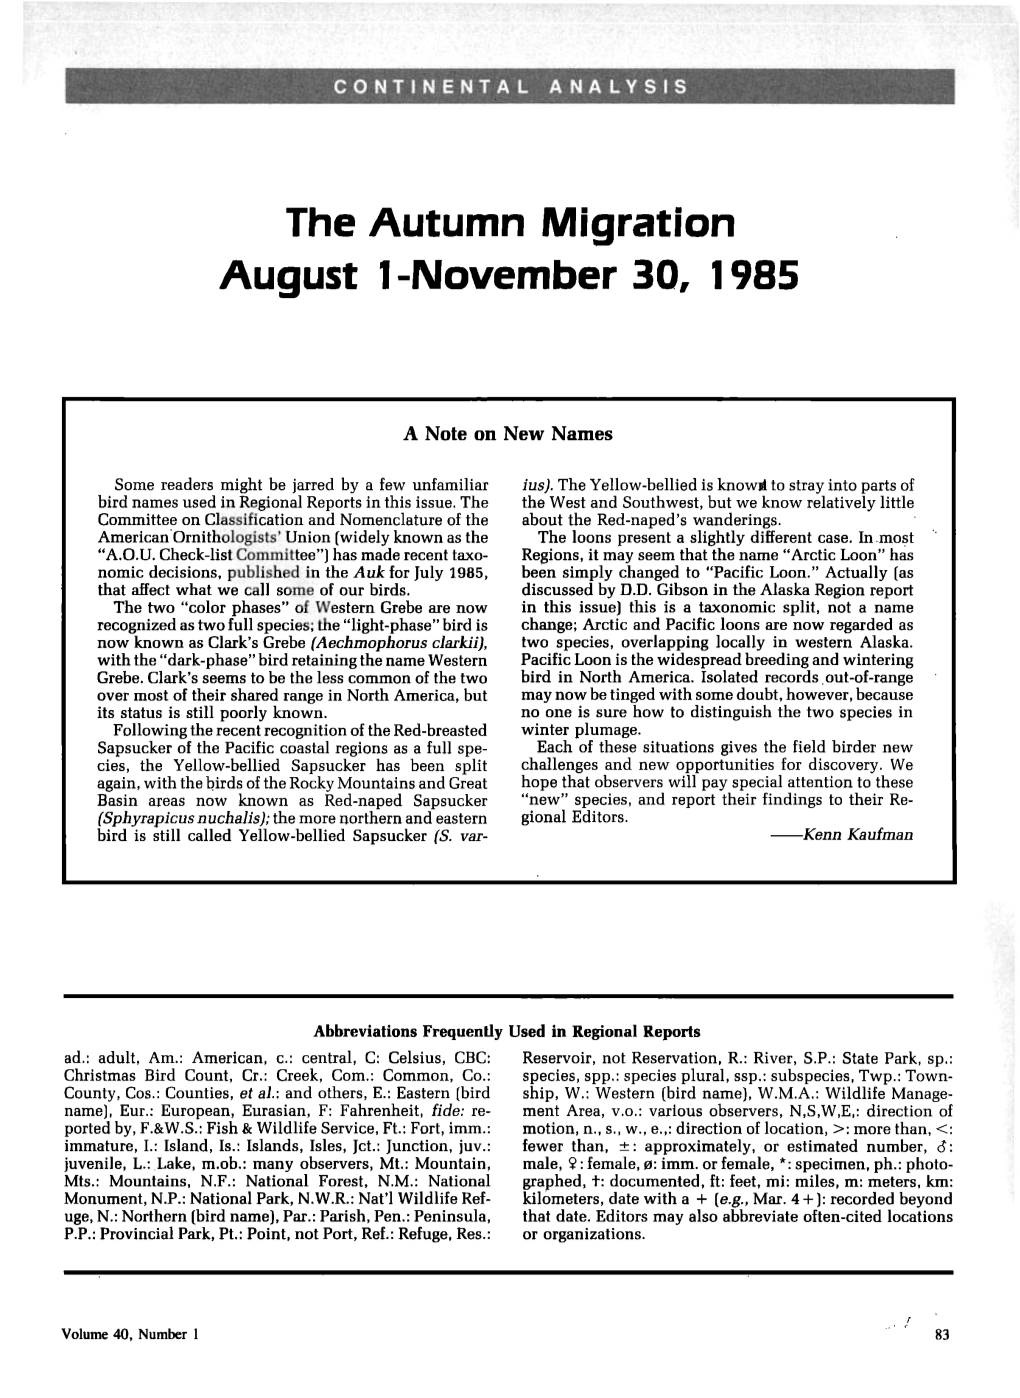 The Autumn Migration August 1-November 30, 1985